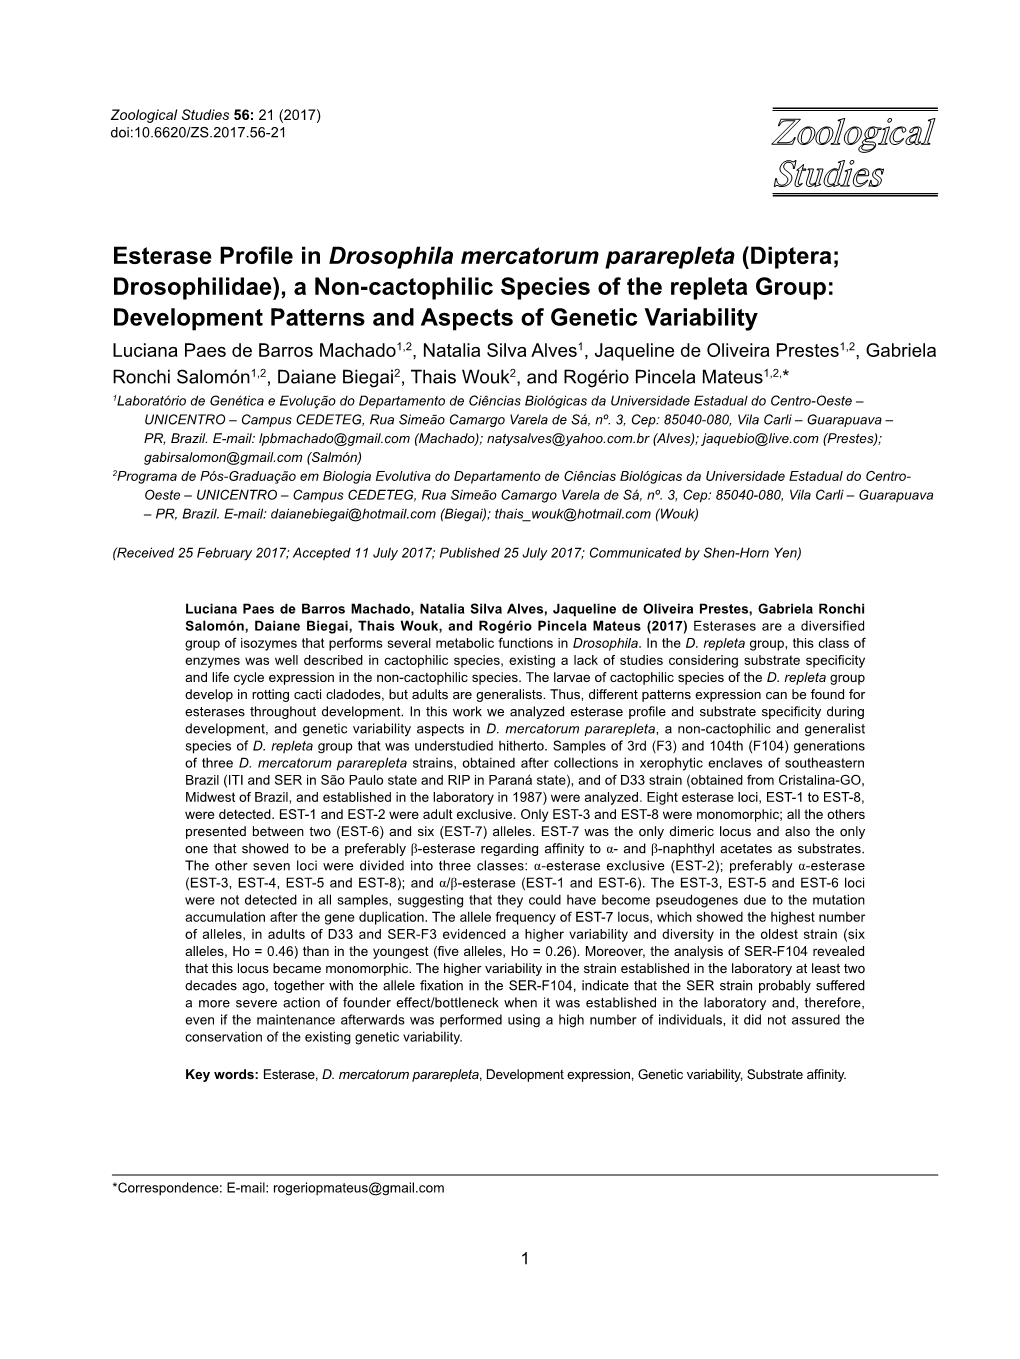 Esterase Profile in Drosophila Mercatorum Pararepleta